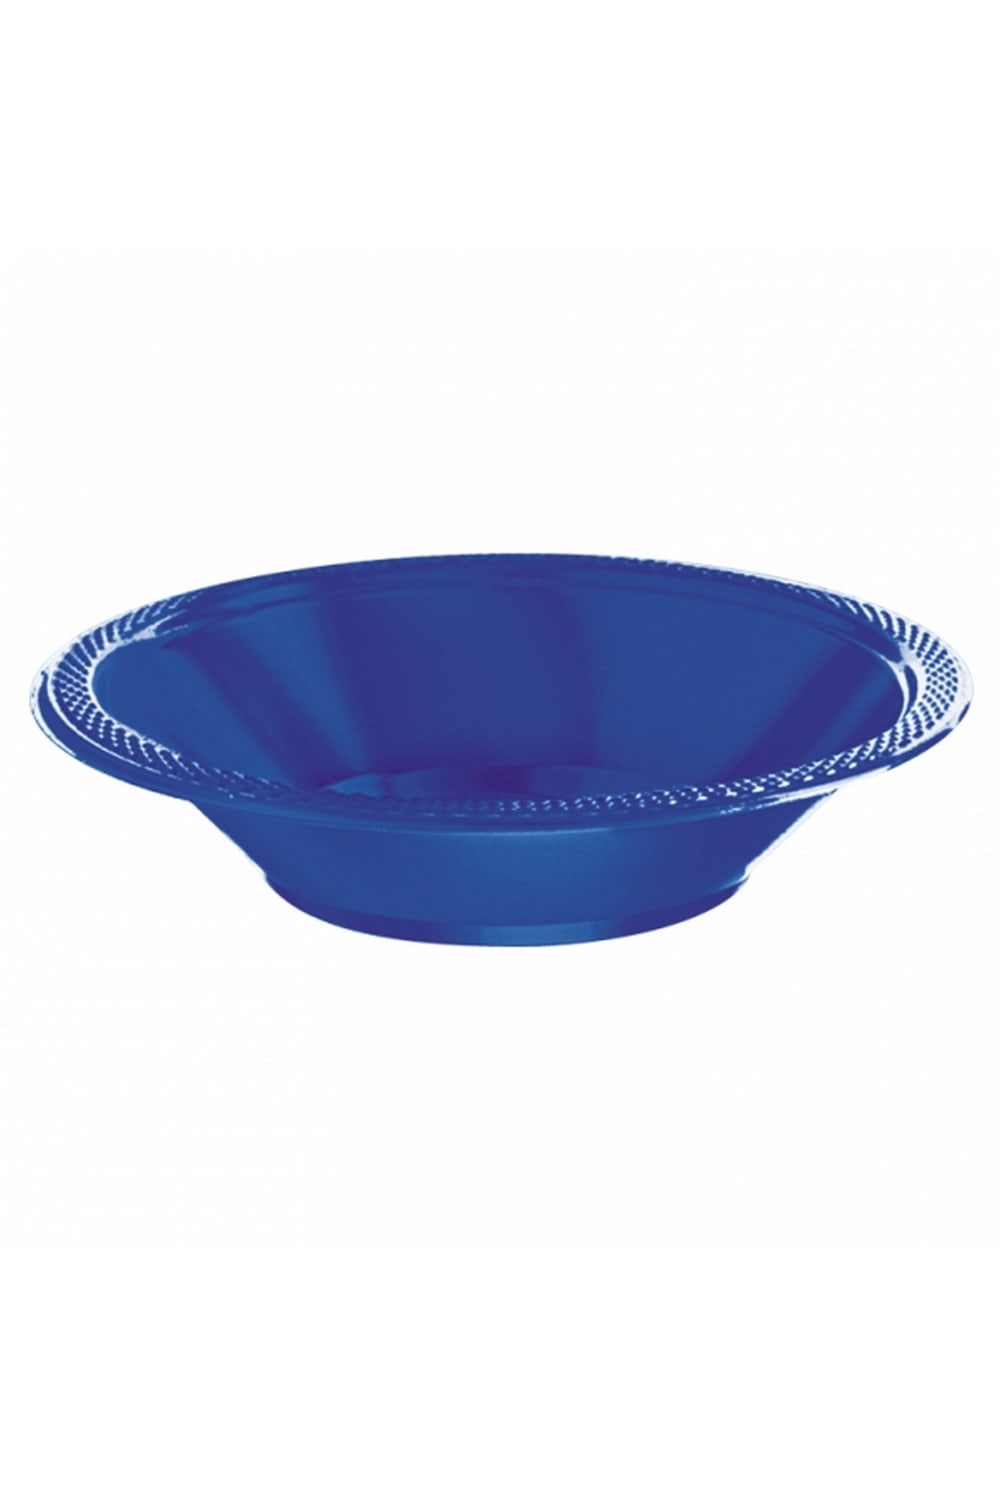 Amscan 12oz Solid Color Plastic Bowls (Pack Of 20) (Bright Royal Blue) (12oz)